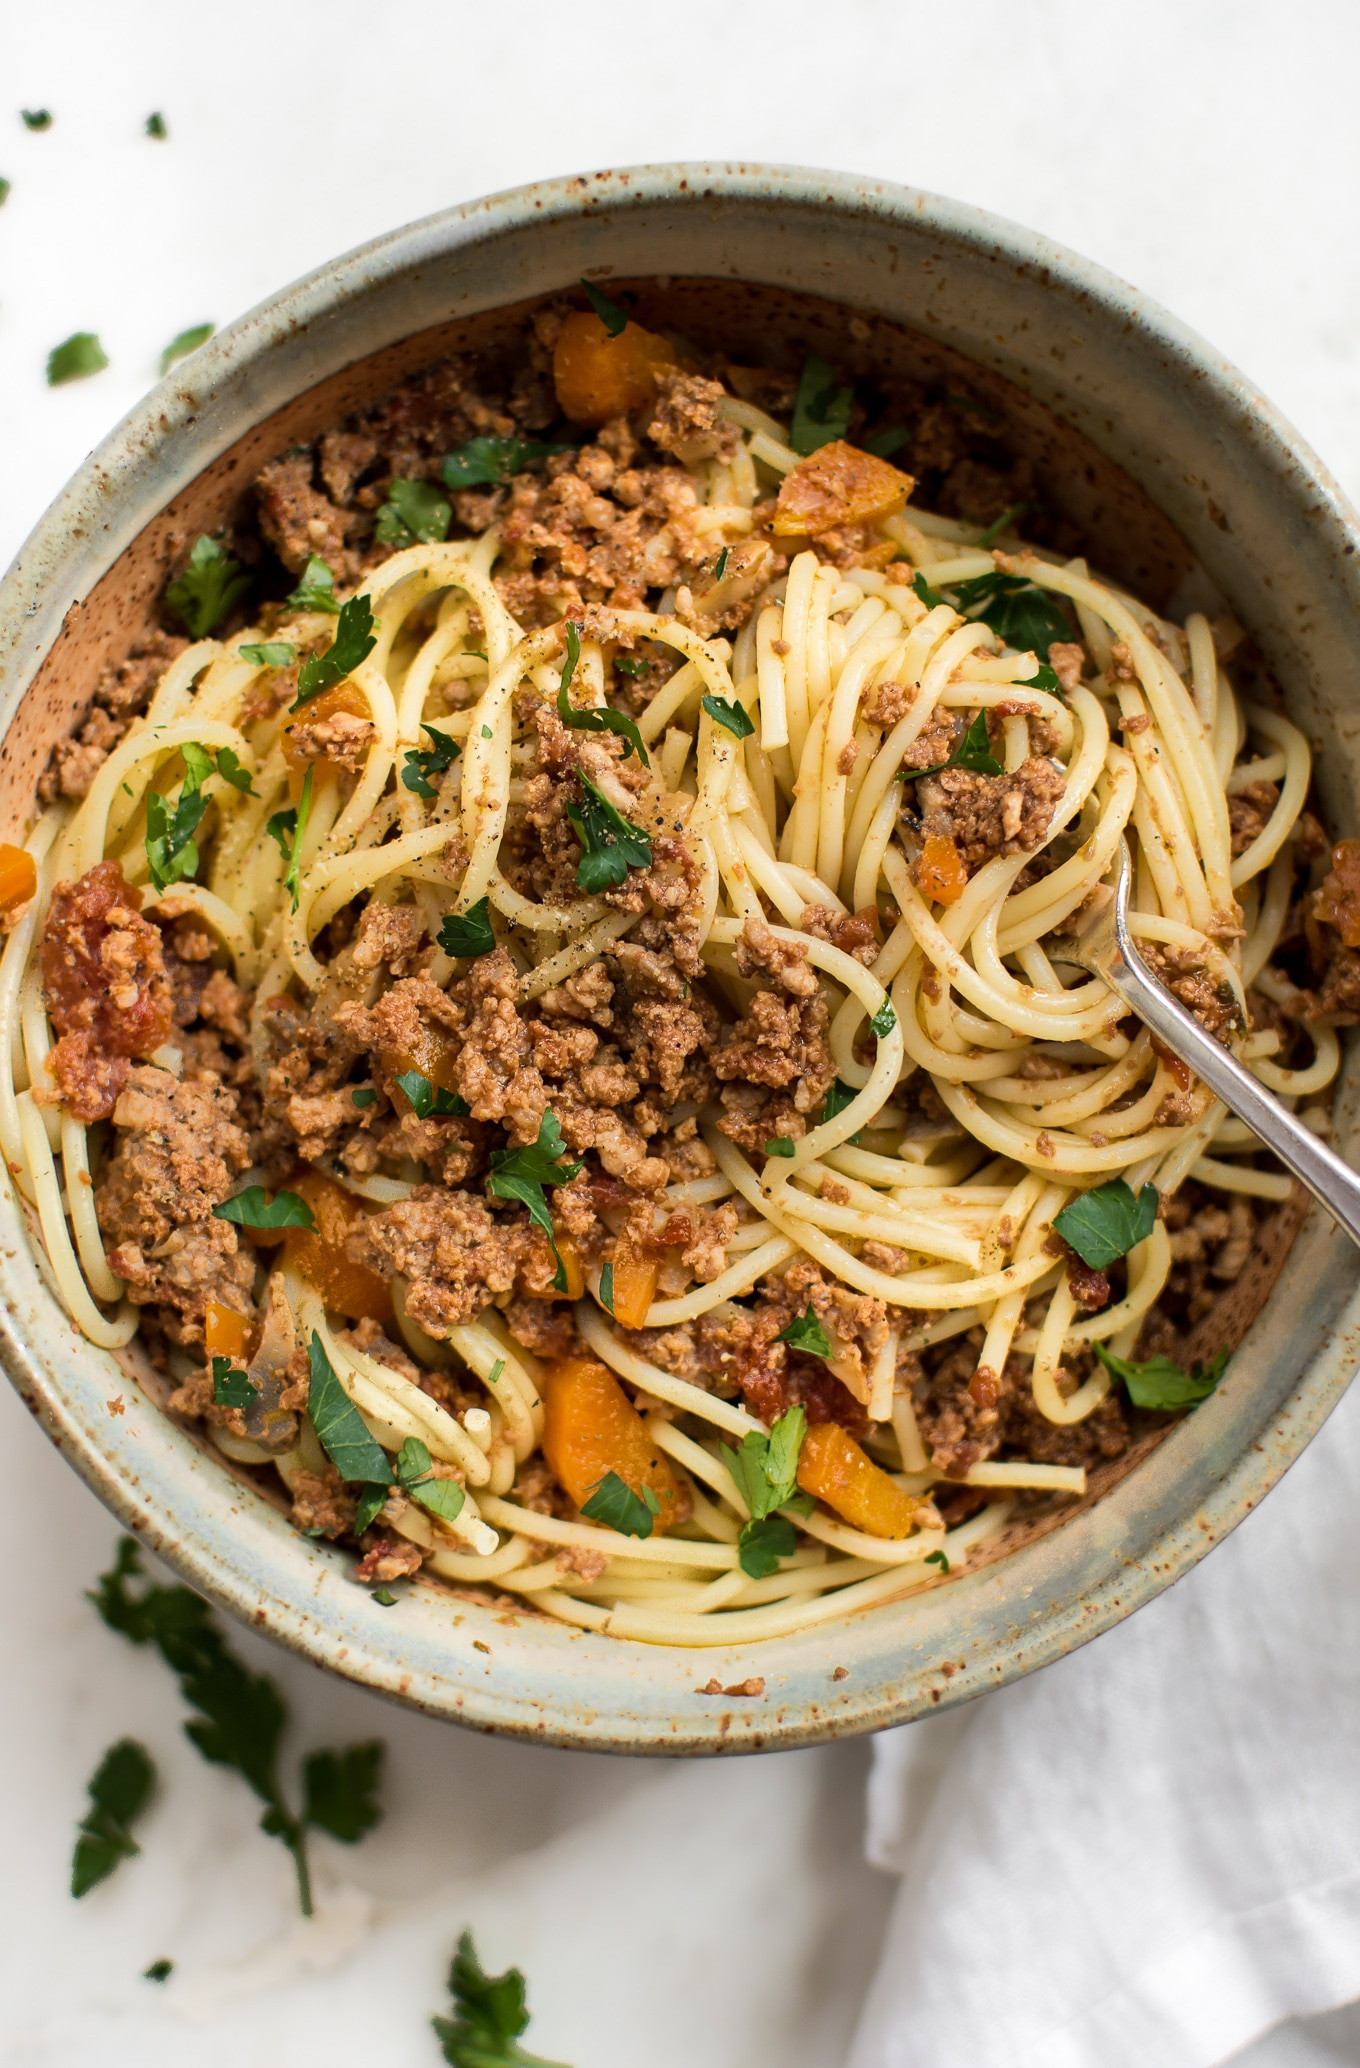 Receipes For Pasta Sauces
 Instant Pot Spaghetti Sauce • Salt & Lavender